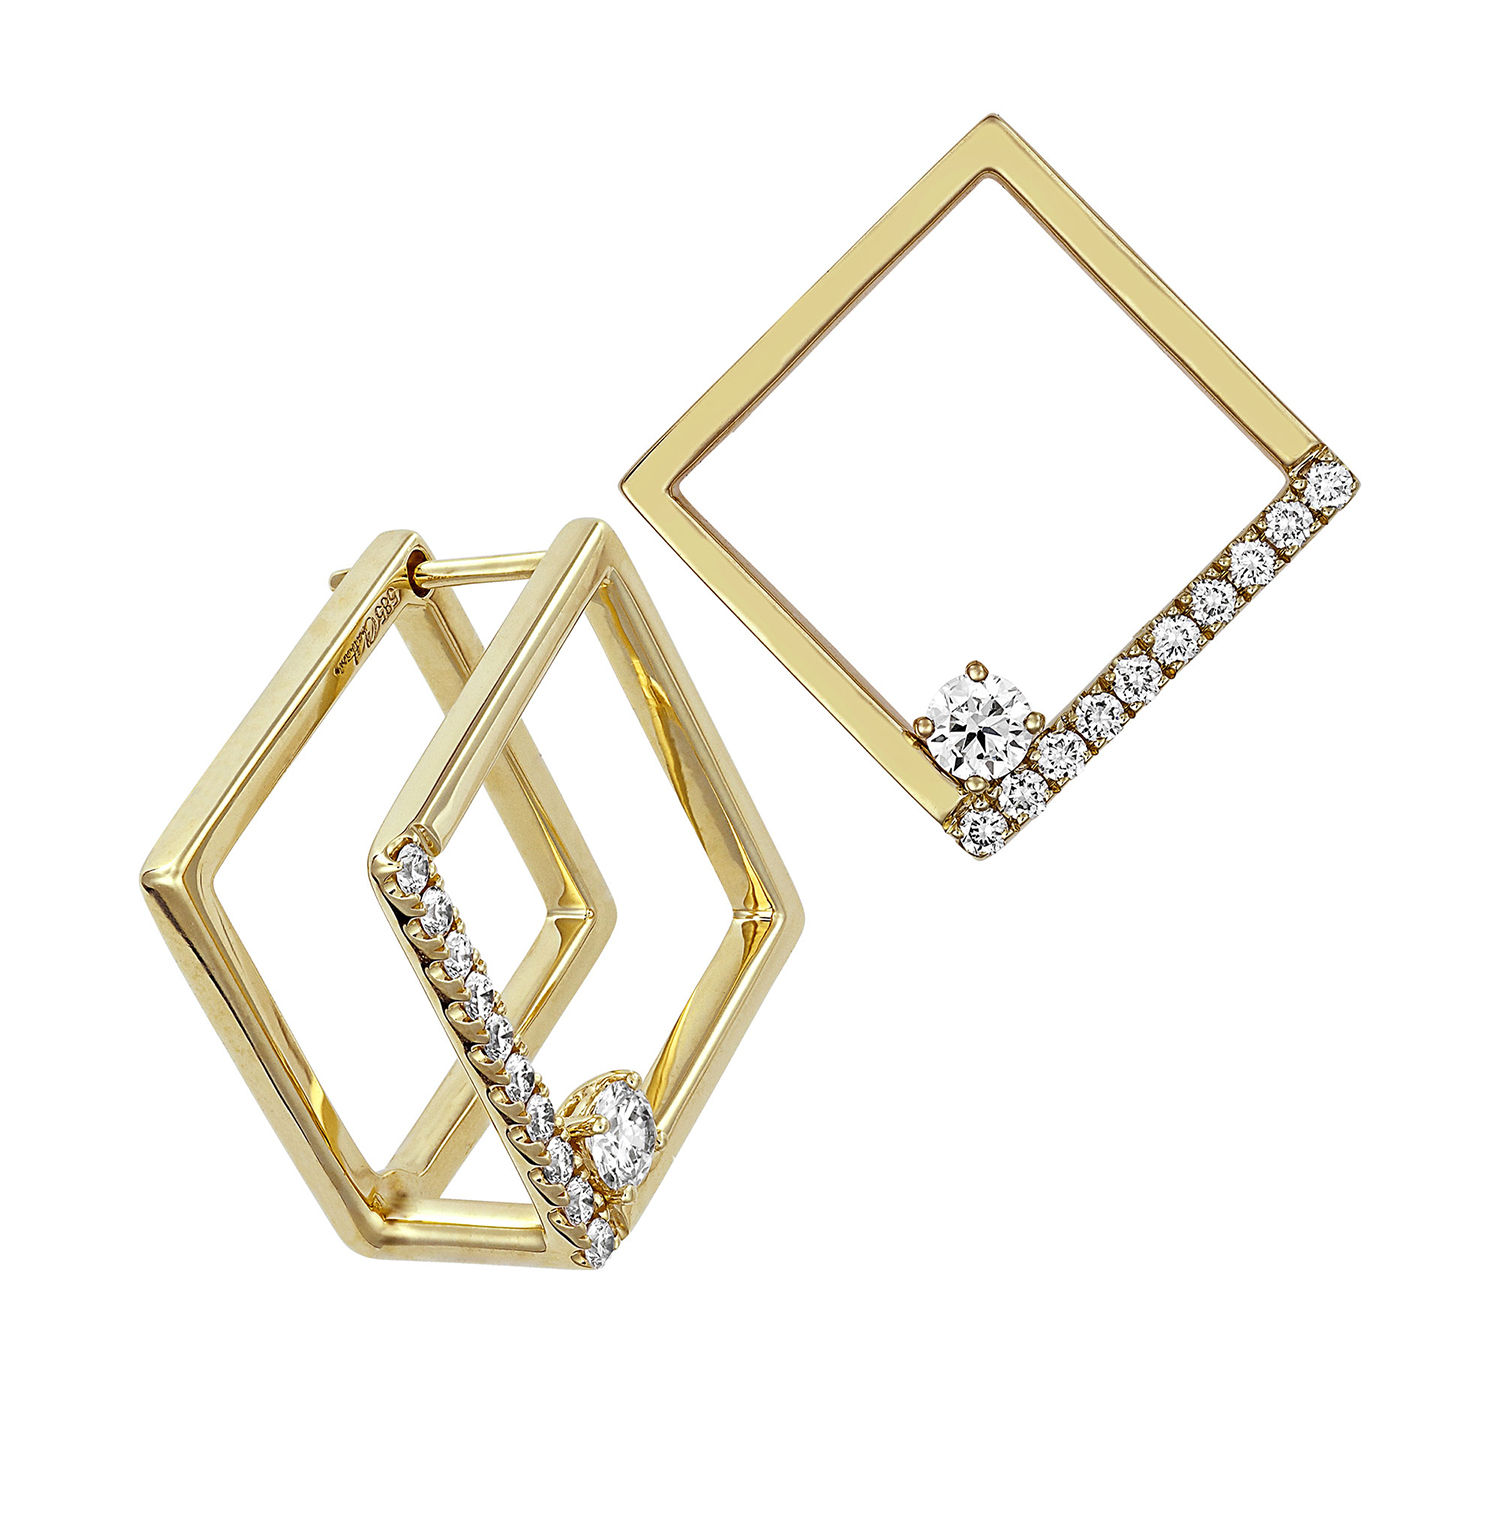 INSTORE Design Awards 2021 &#8211; Laboratory-Created Diamond and/or Gemstone Jewelry